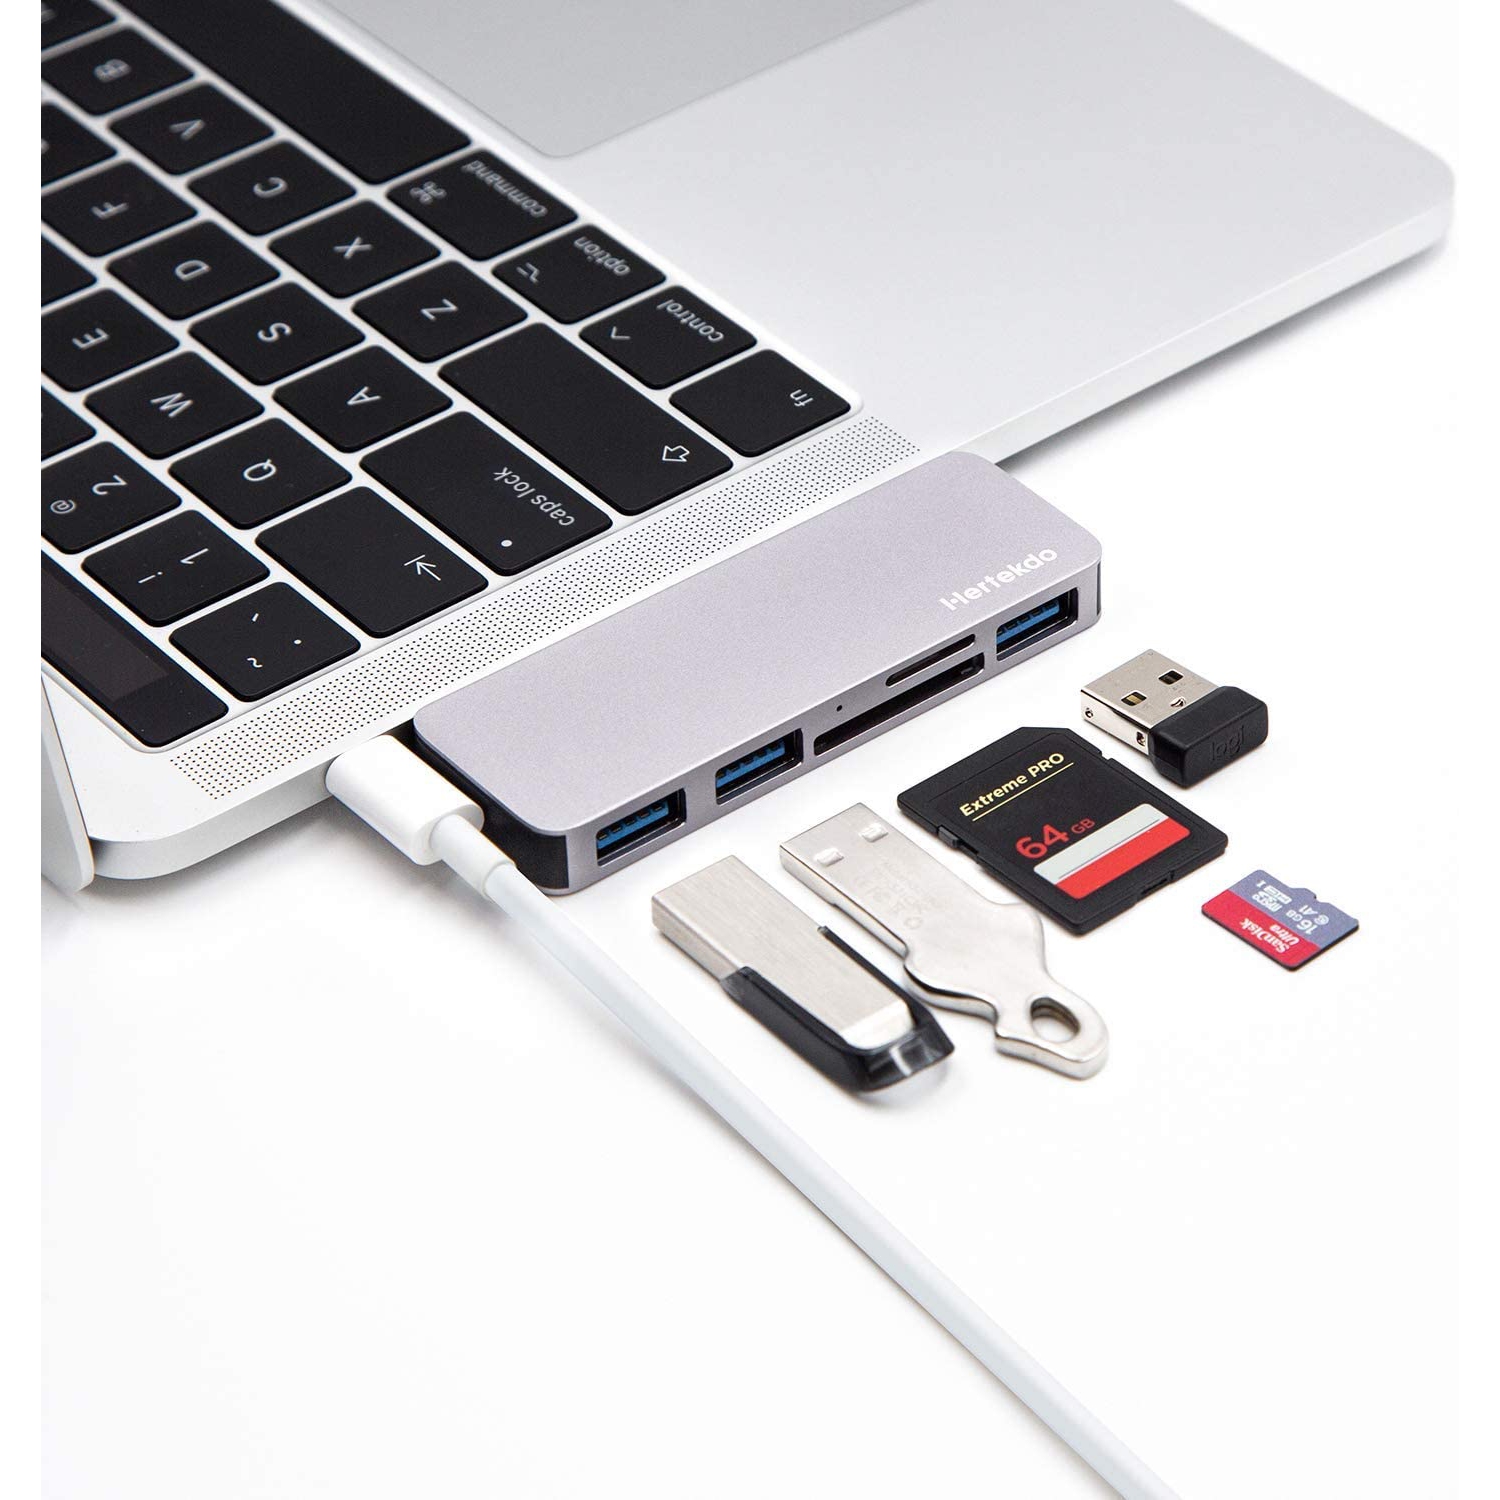 USB C HUB, 5 in 1 USB C Hub Adapter with 3 USB 3.0,SD/TF Card Reader,Type C Hub USB HUB Compatible with MacBook,MacBook Pro,MacBook Air,Google, Dell,Asus,Huawei,Microsoft